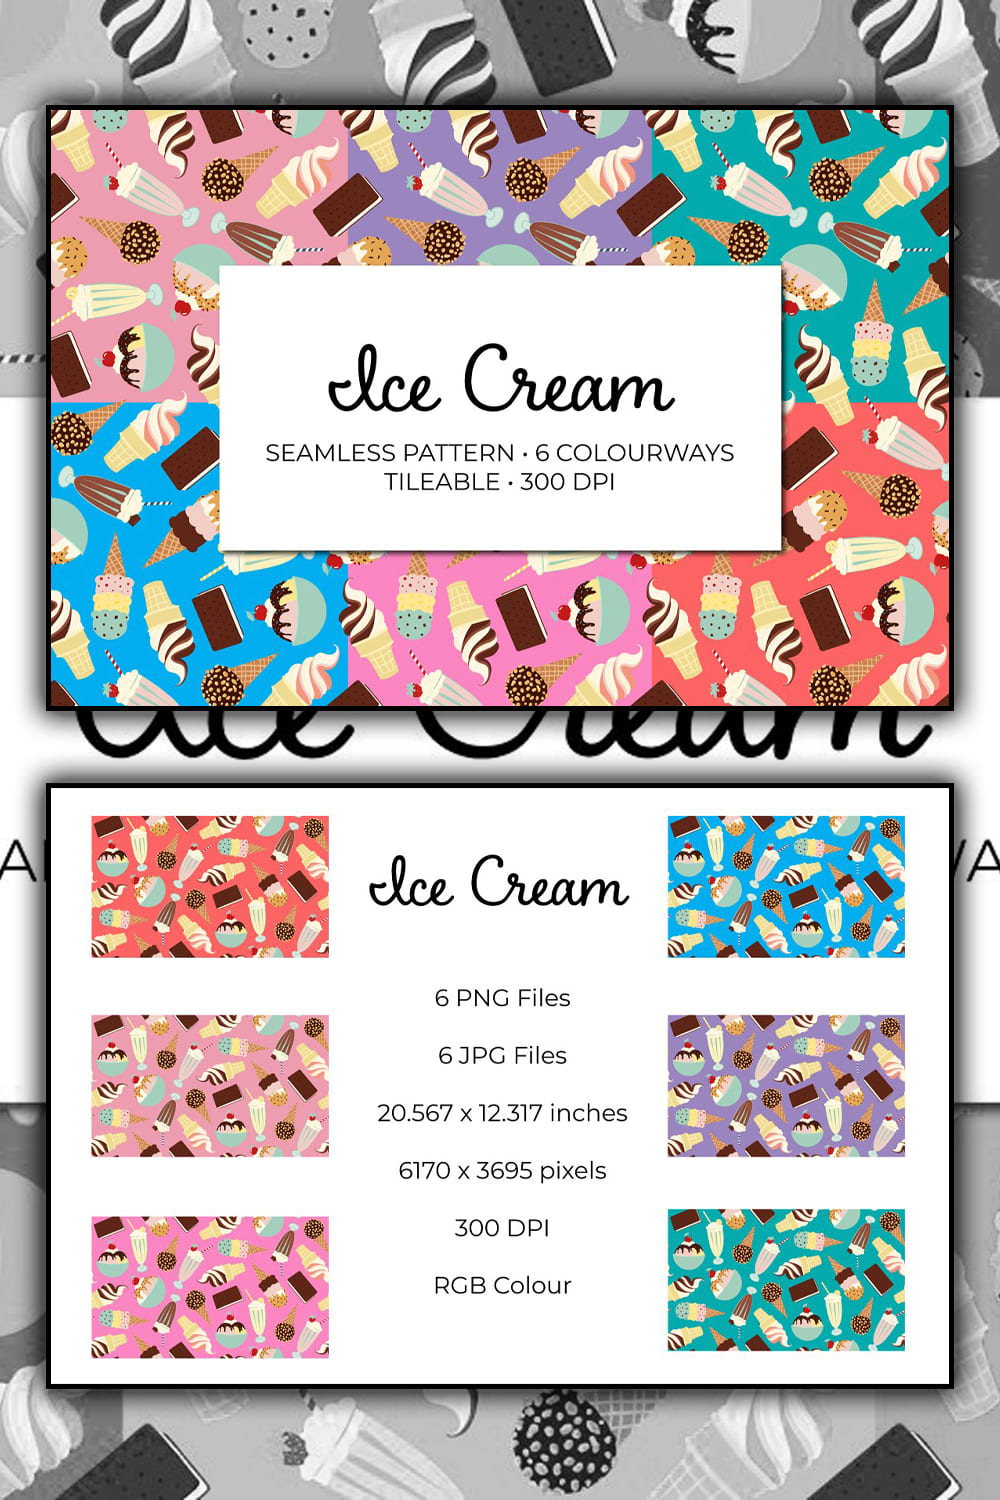 Ice Cream Seamless Pattern - Pinterest.